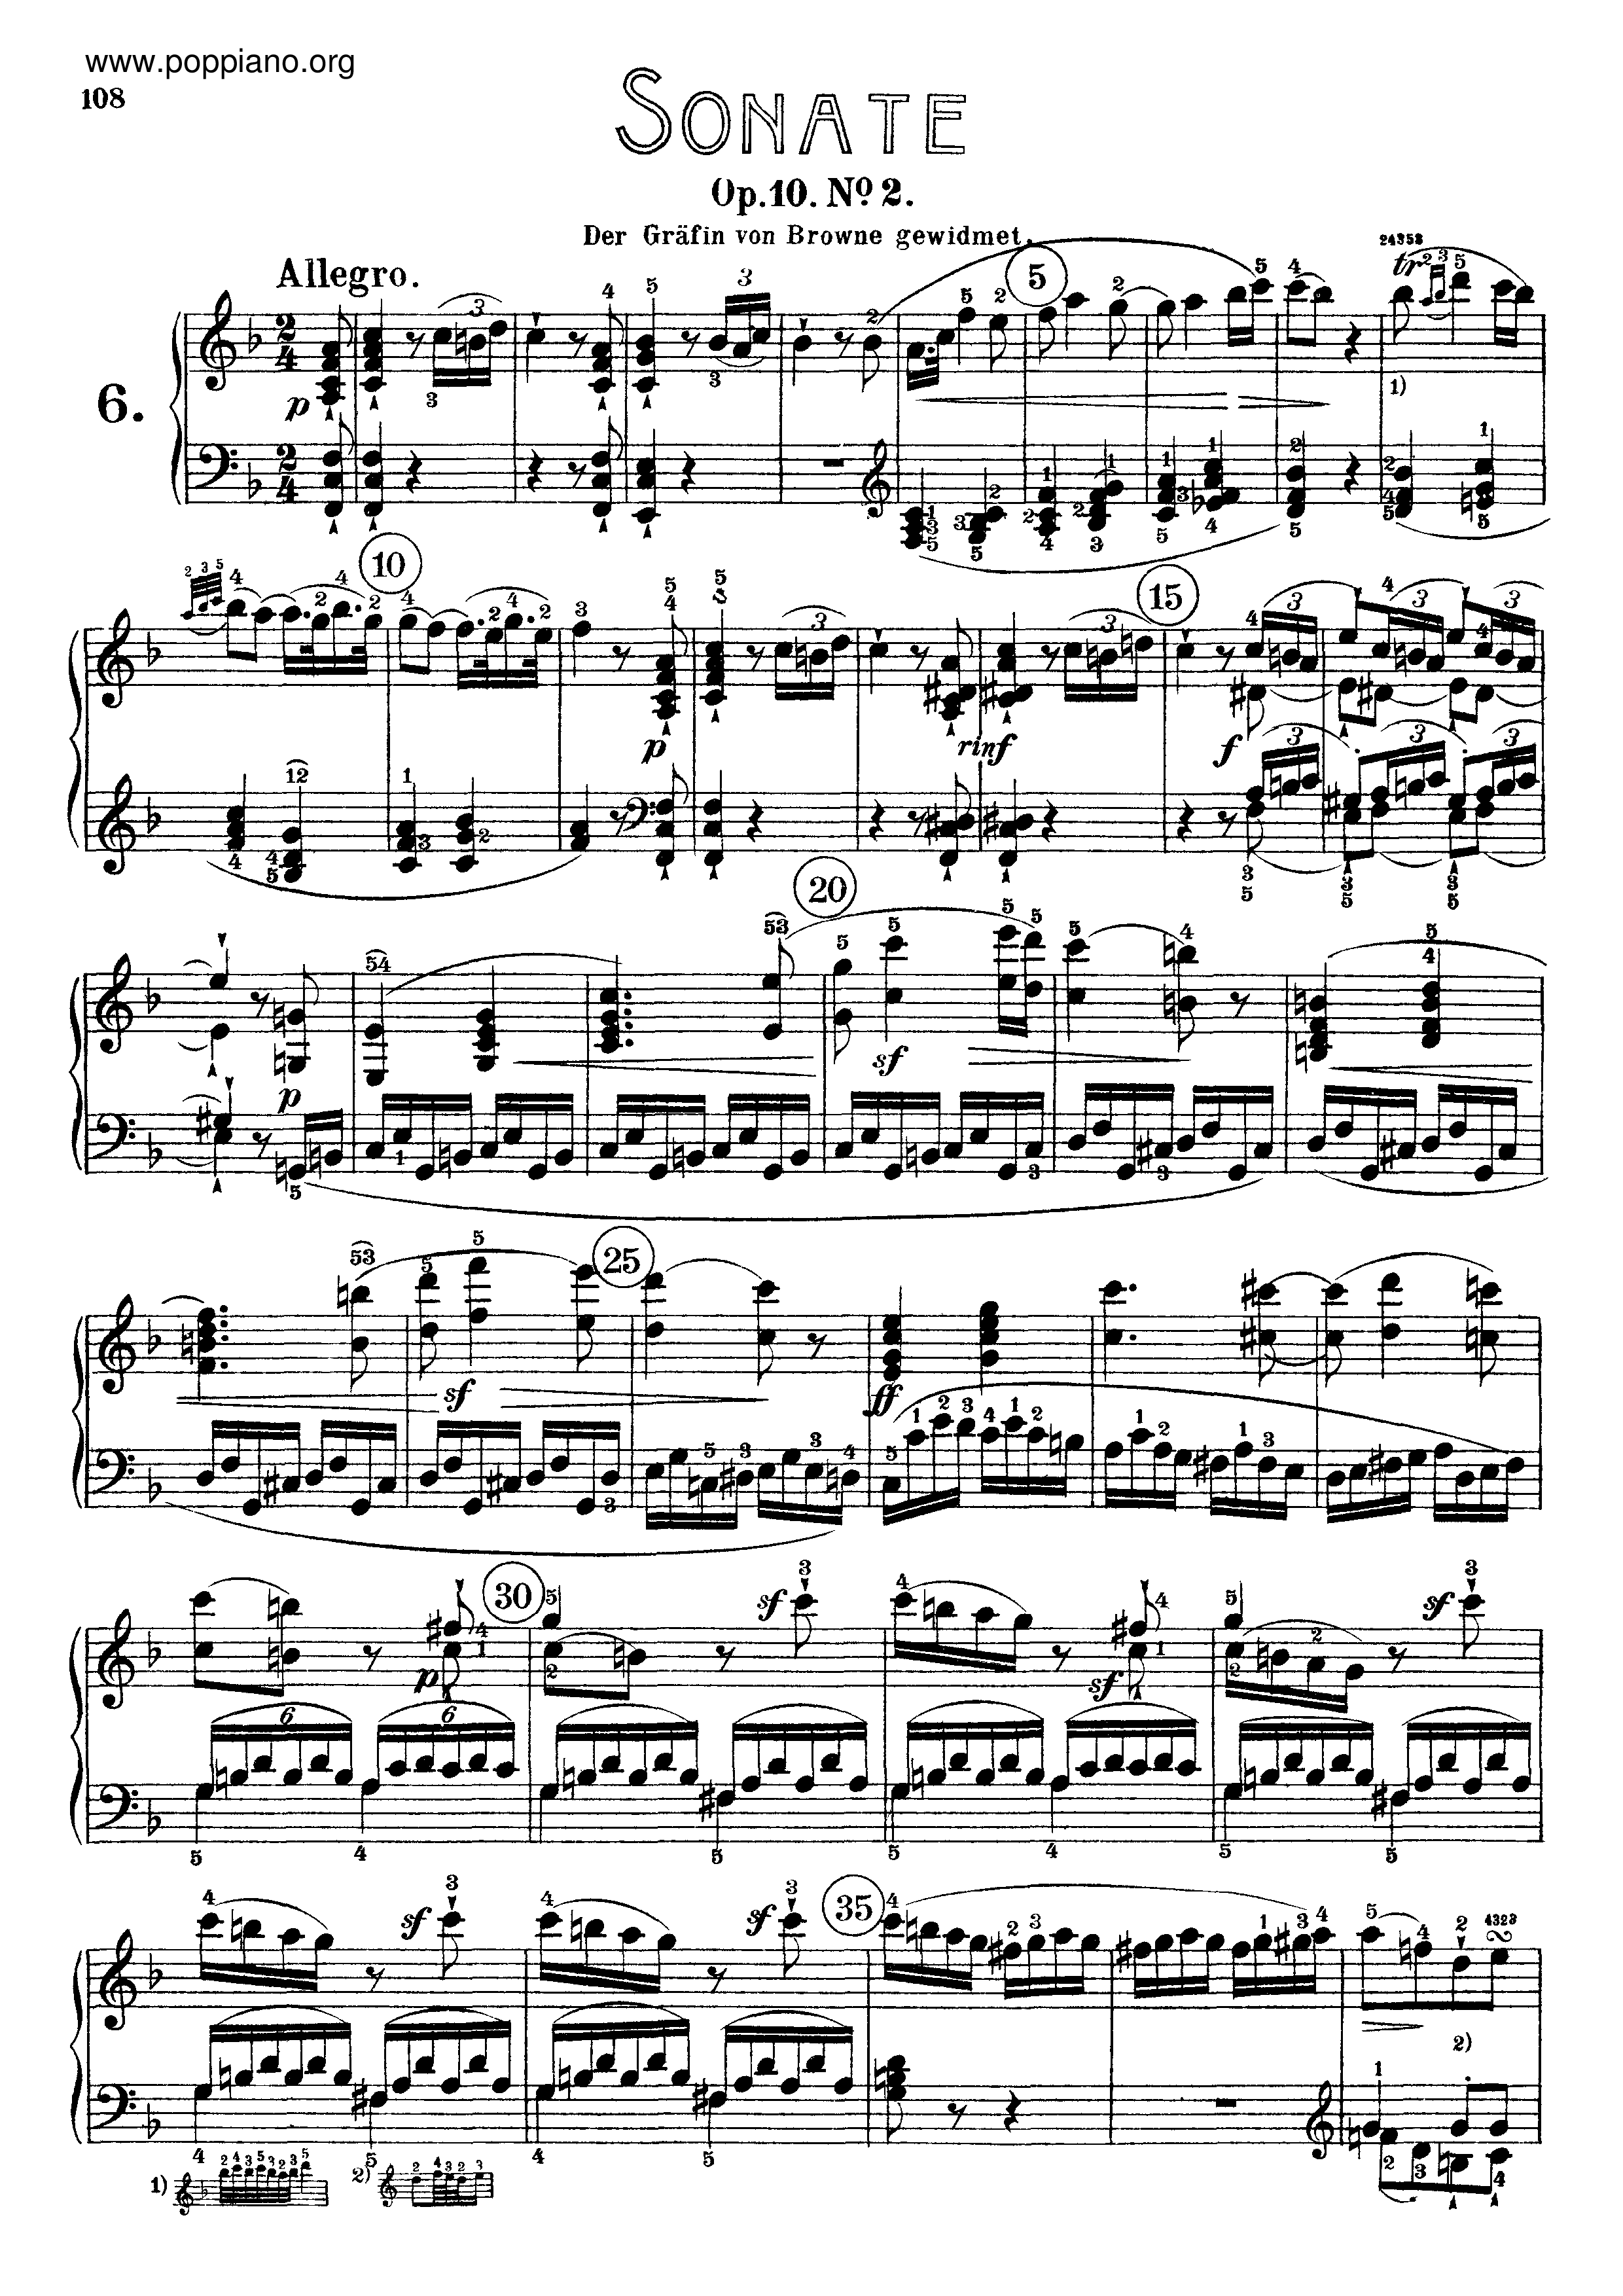 Sonata No. 6 in F major琴谱